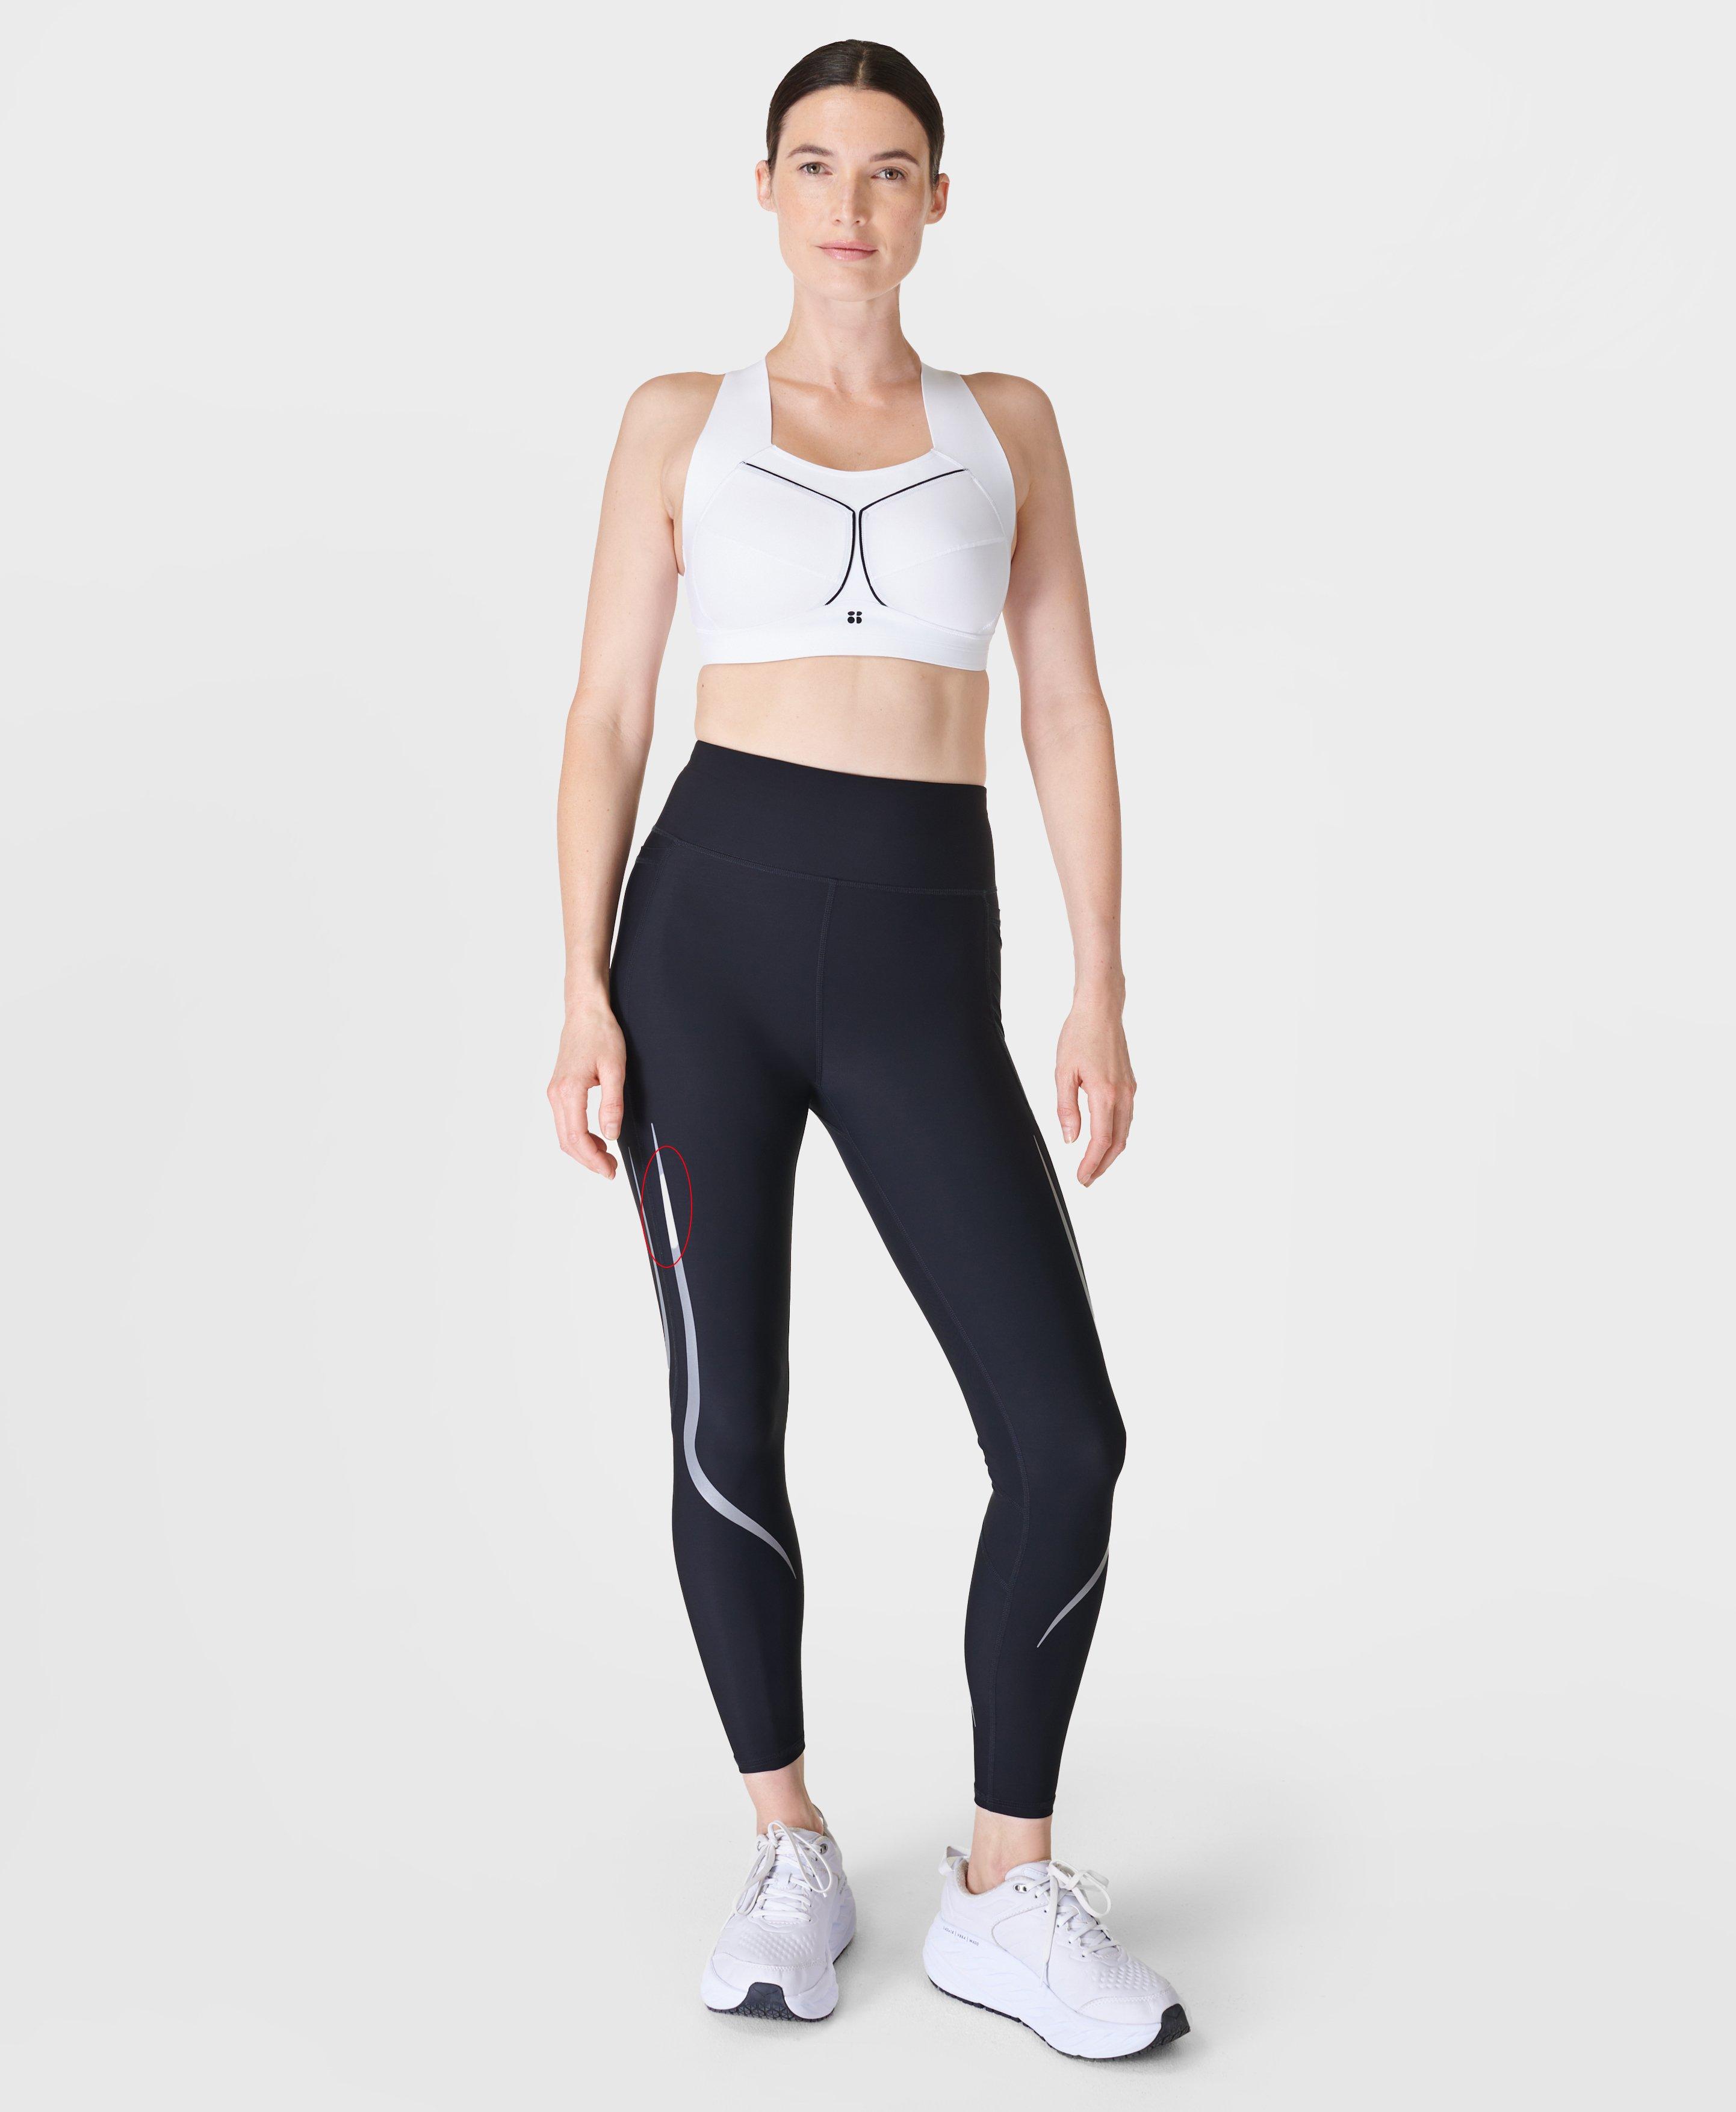 Sweaty Betty - Introducing the Rapid Run leggings. ✓Cool handfeel